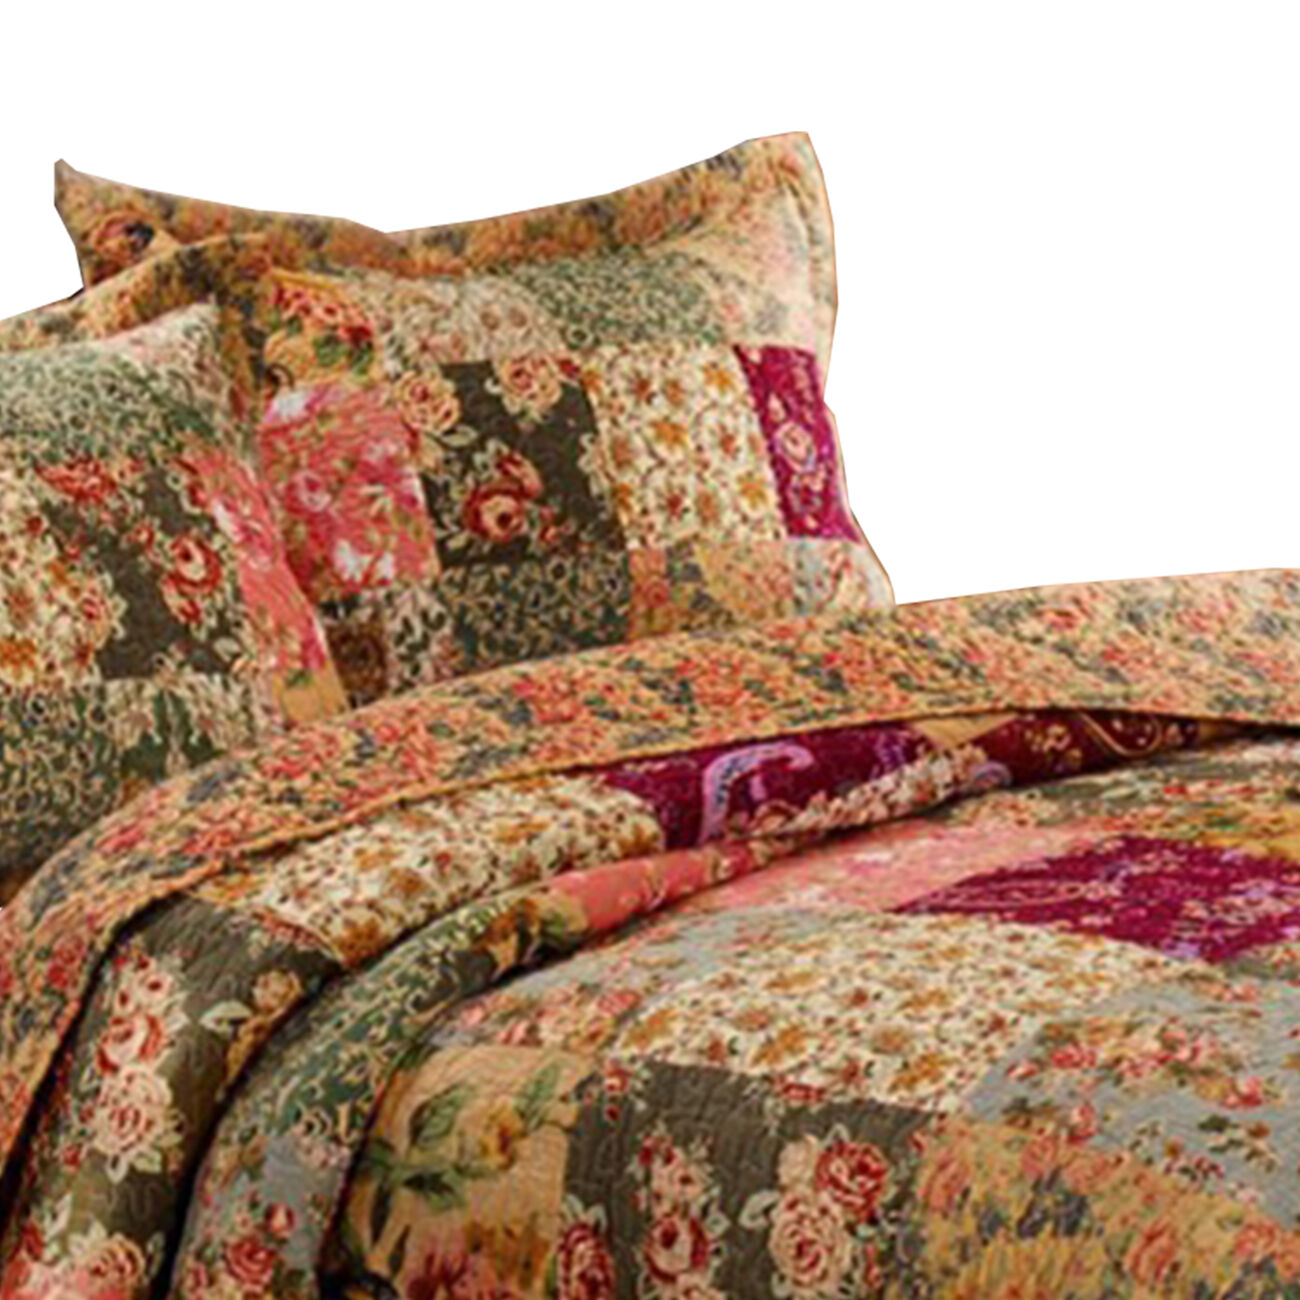 Kamet 3 Piece Fabric Full Size Bedspread Set with Floral Prints, Multicolor